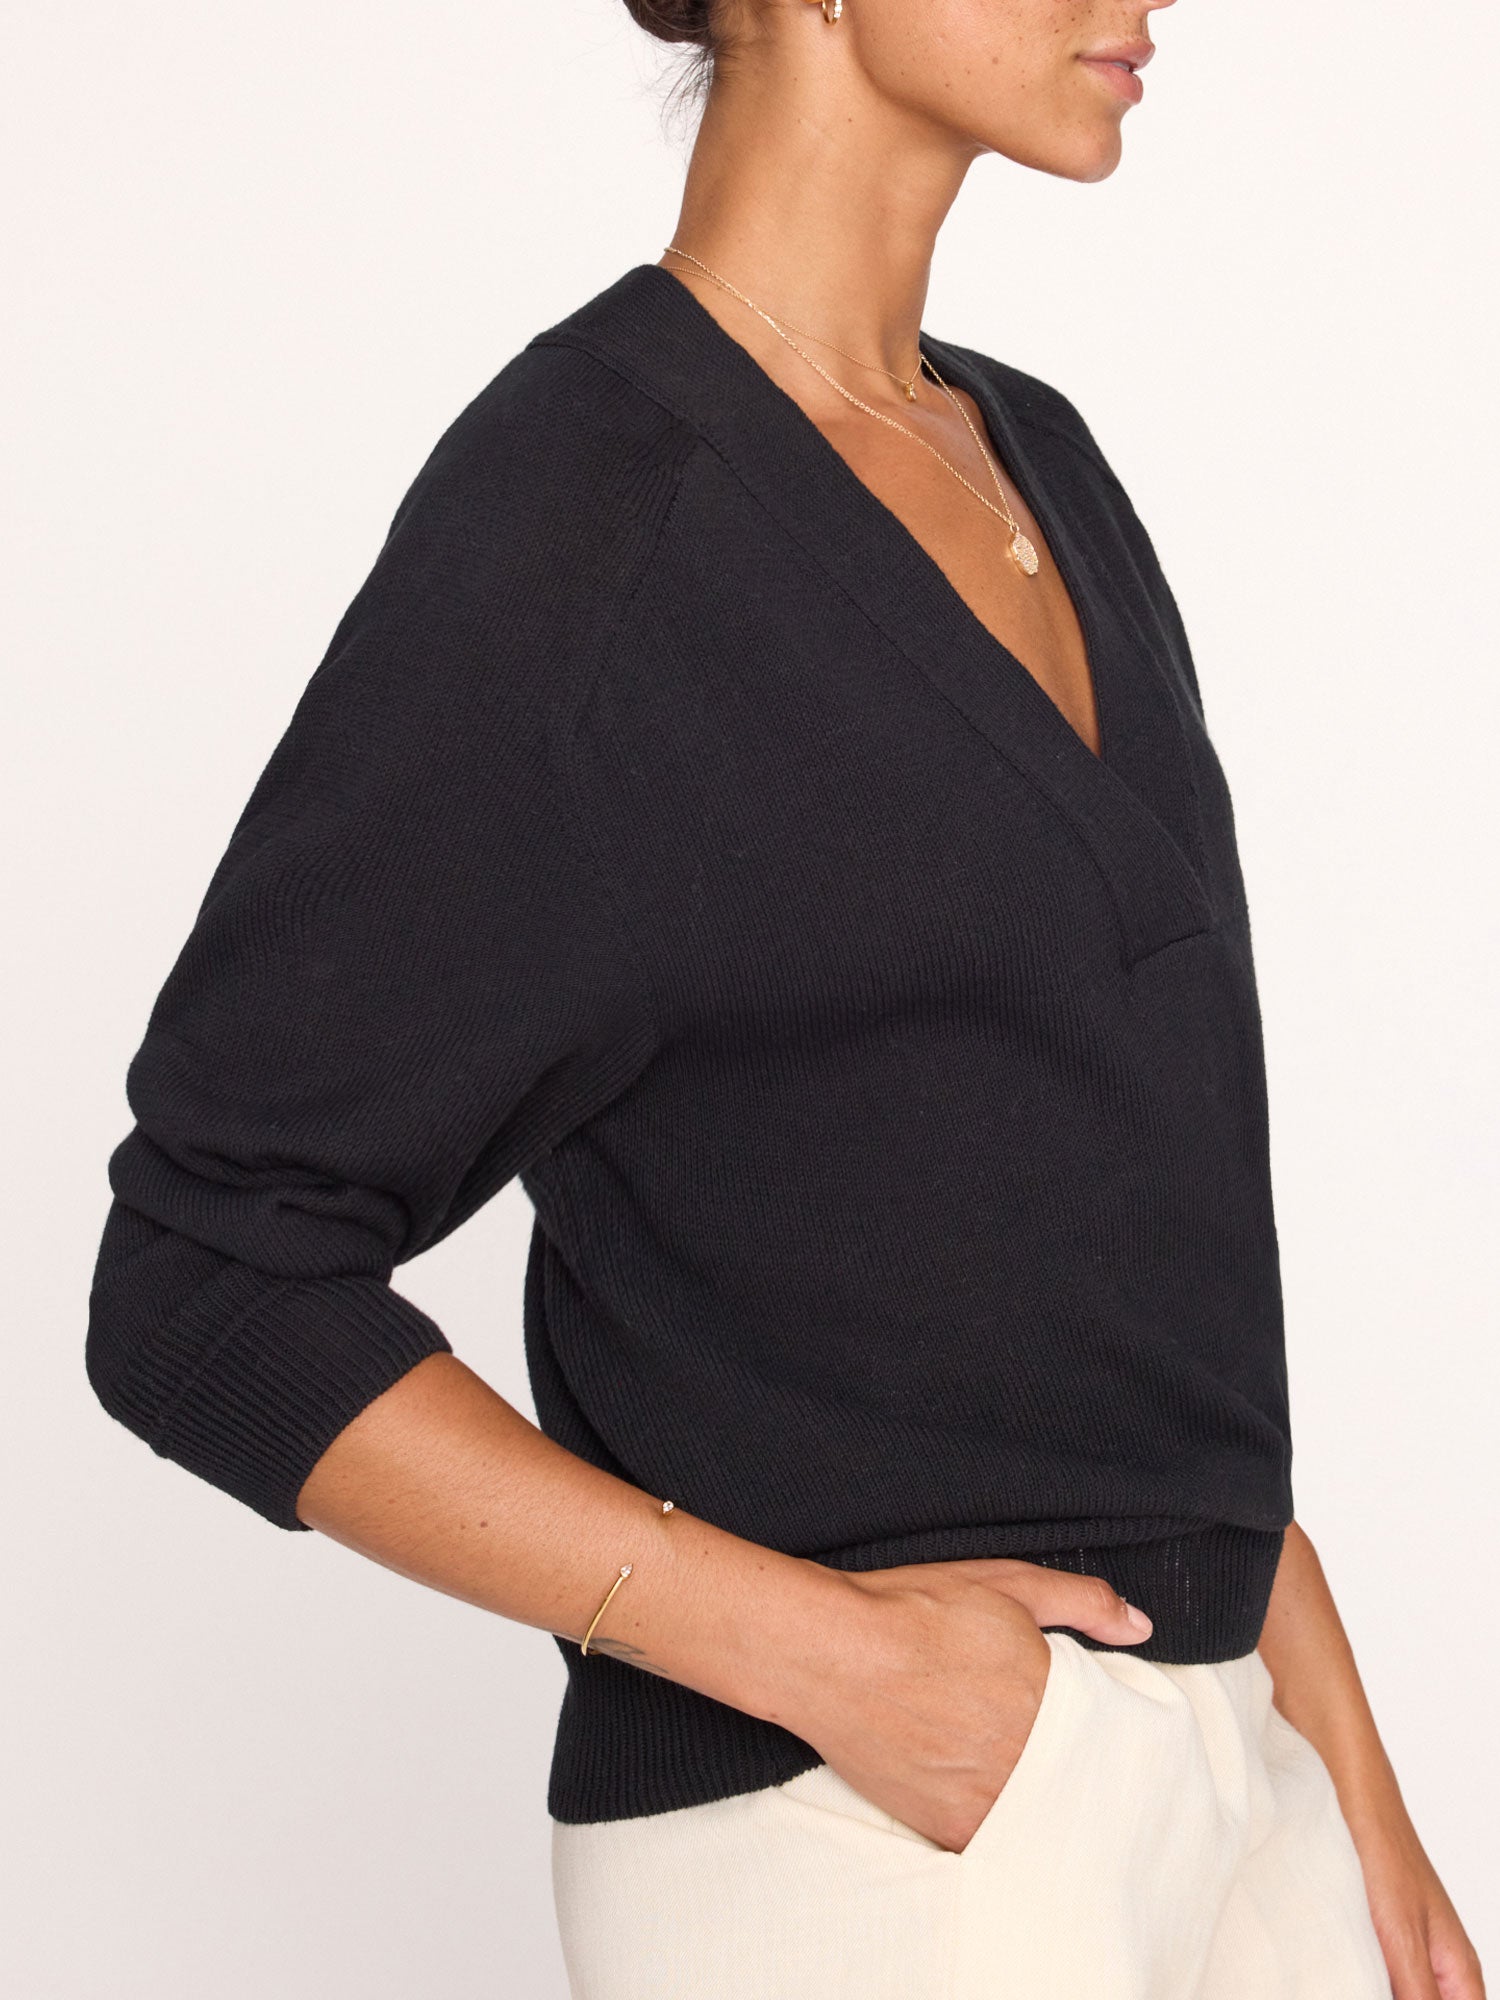 Imogen V-neck cotton black sweater side view